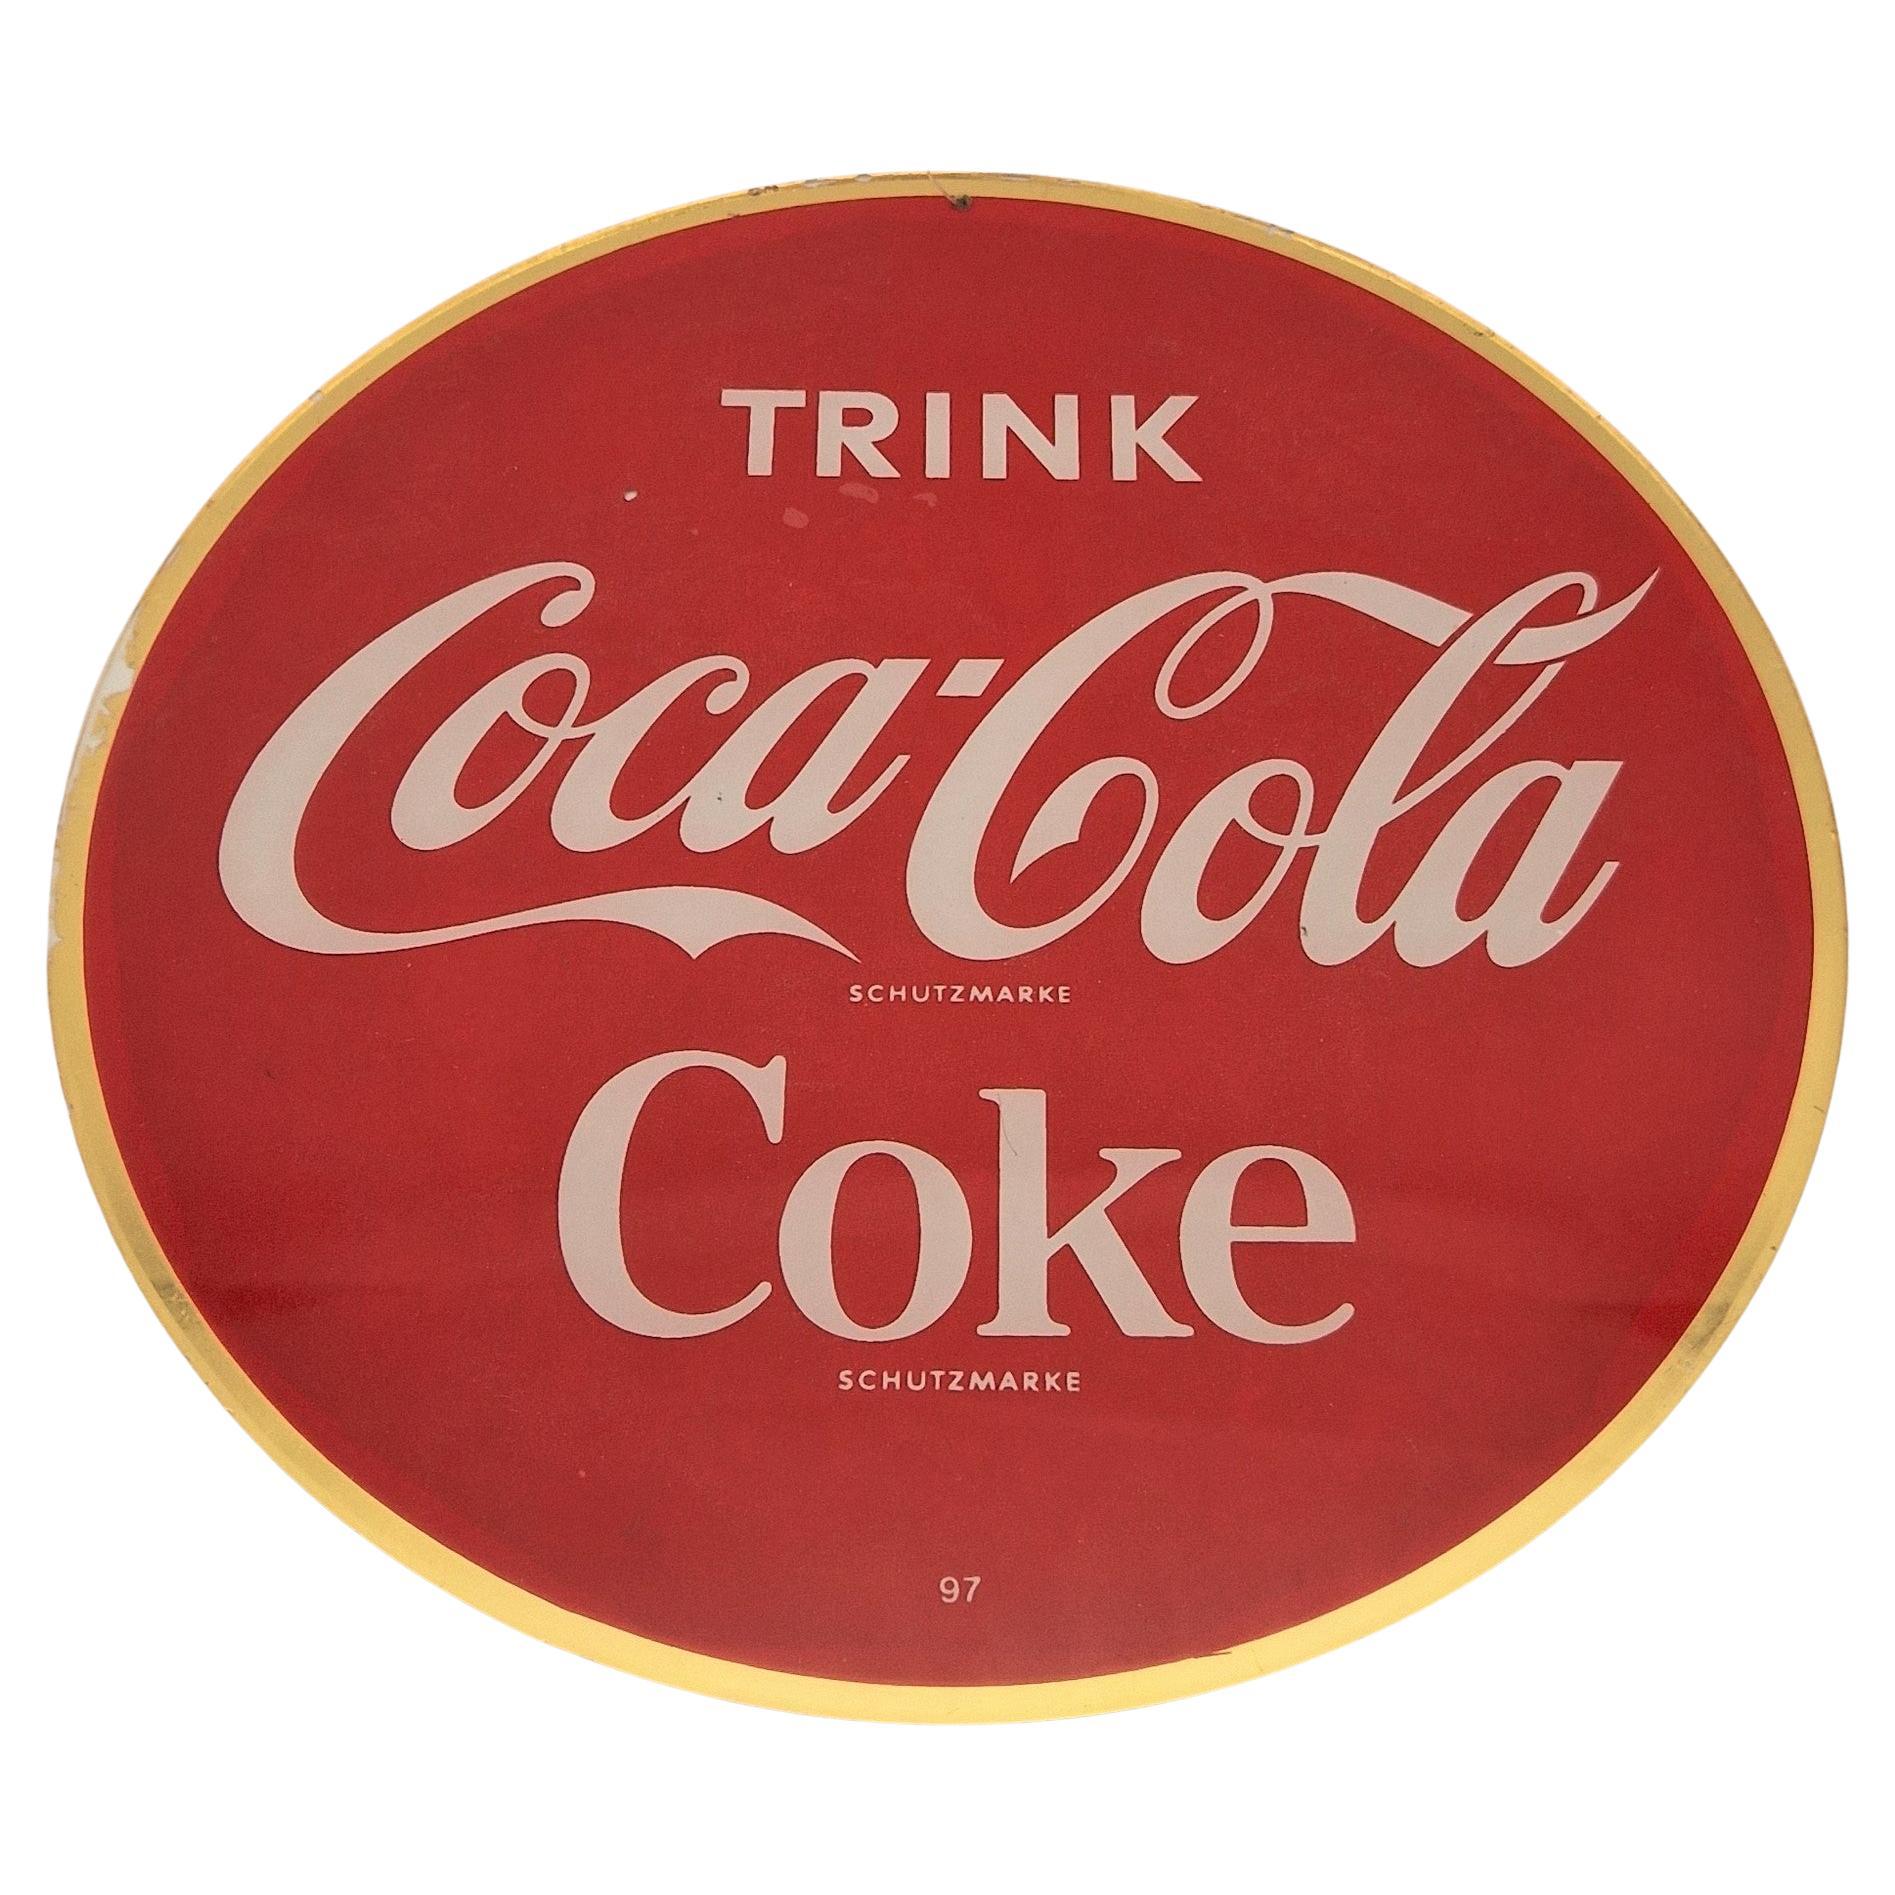 Panneau publicitaire en verre « Drink Coca Cola - Coke », 1950 - 1959 en vente